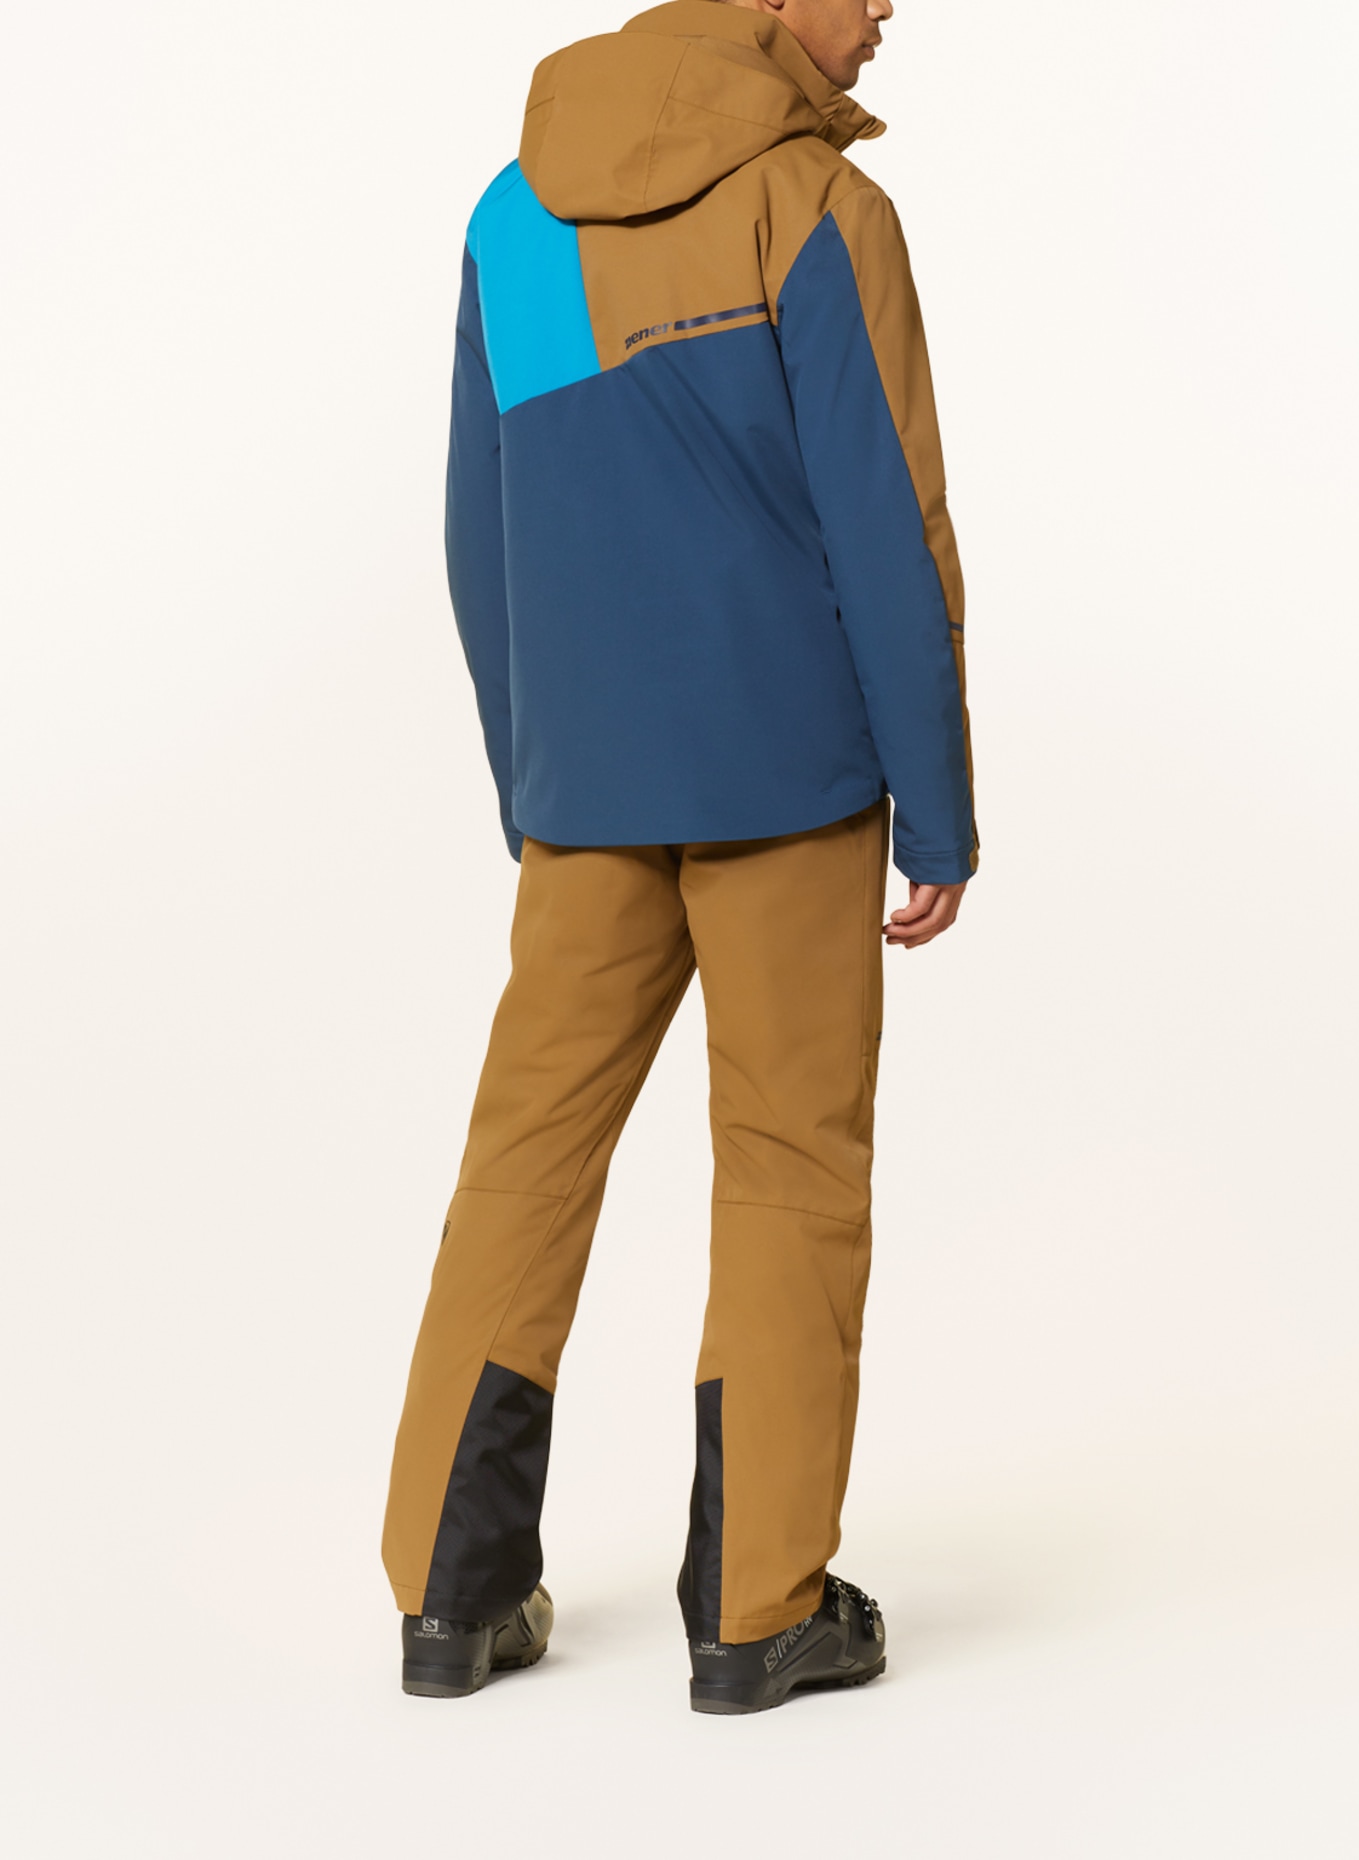 Ski turquoise/ in blue ziener dark TIMPA olive/ jacket